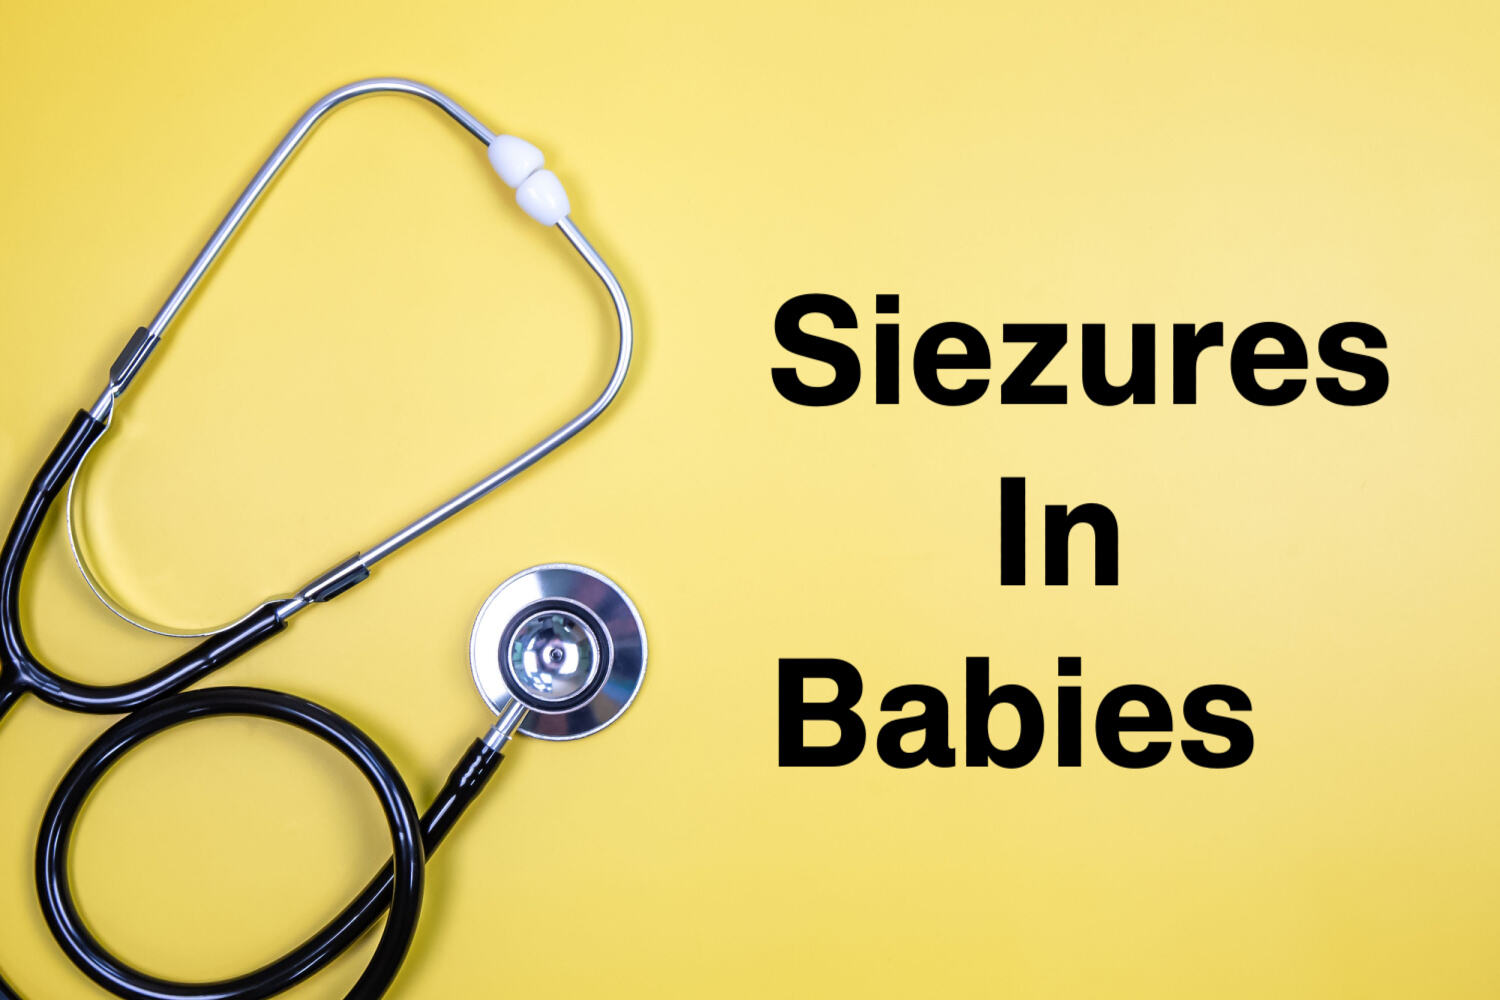 Seizures in babies